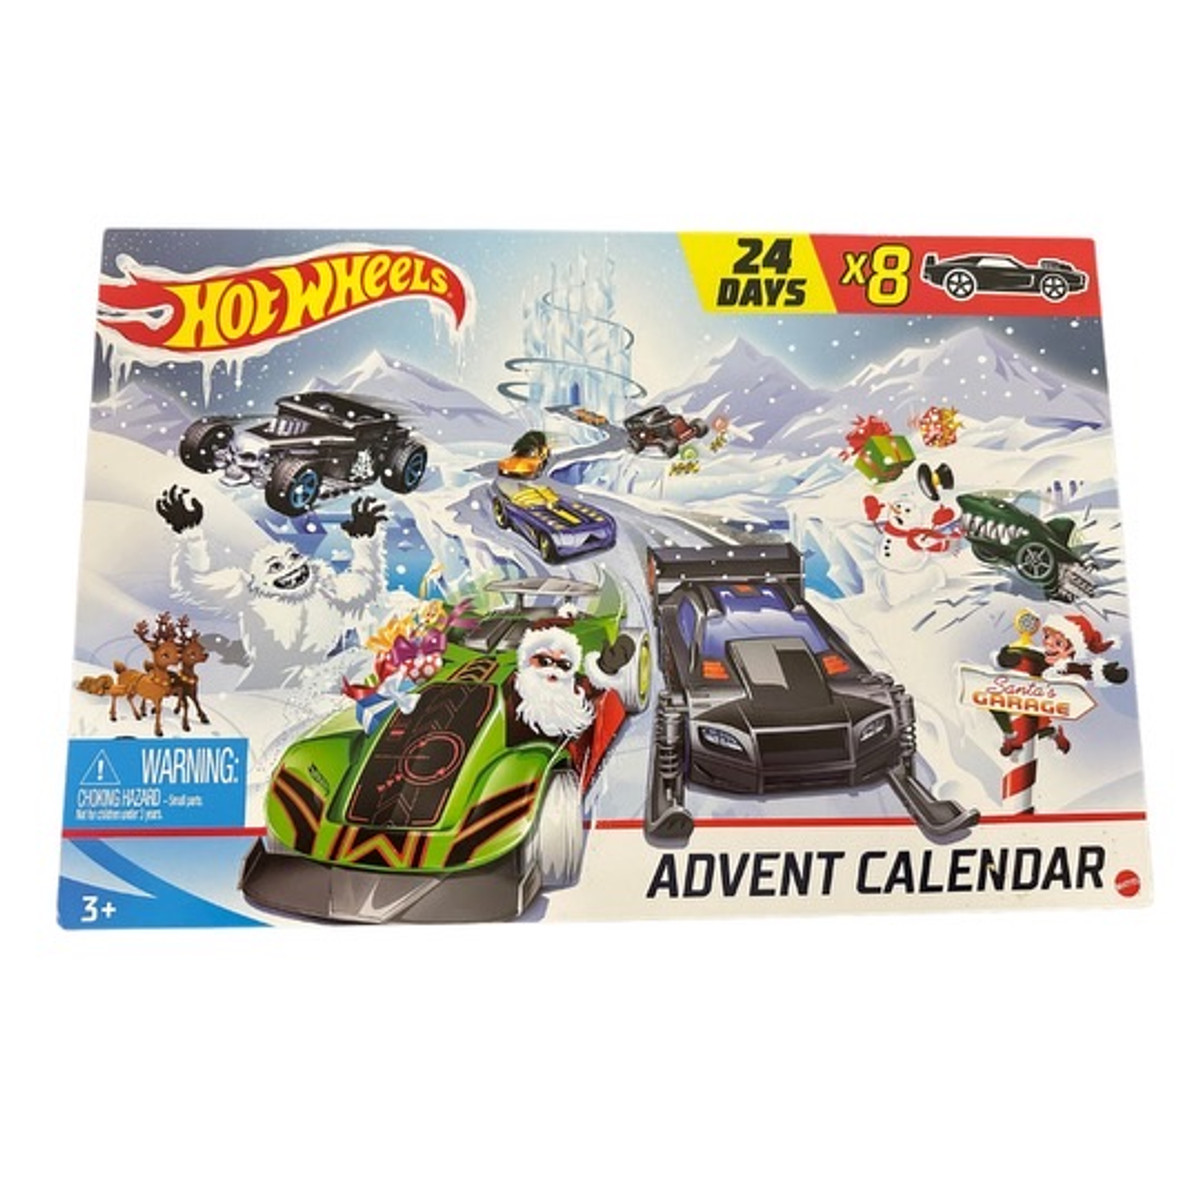 2020 Hot wheels Advent Calendar With 8 Cars 